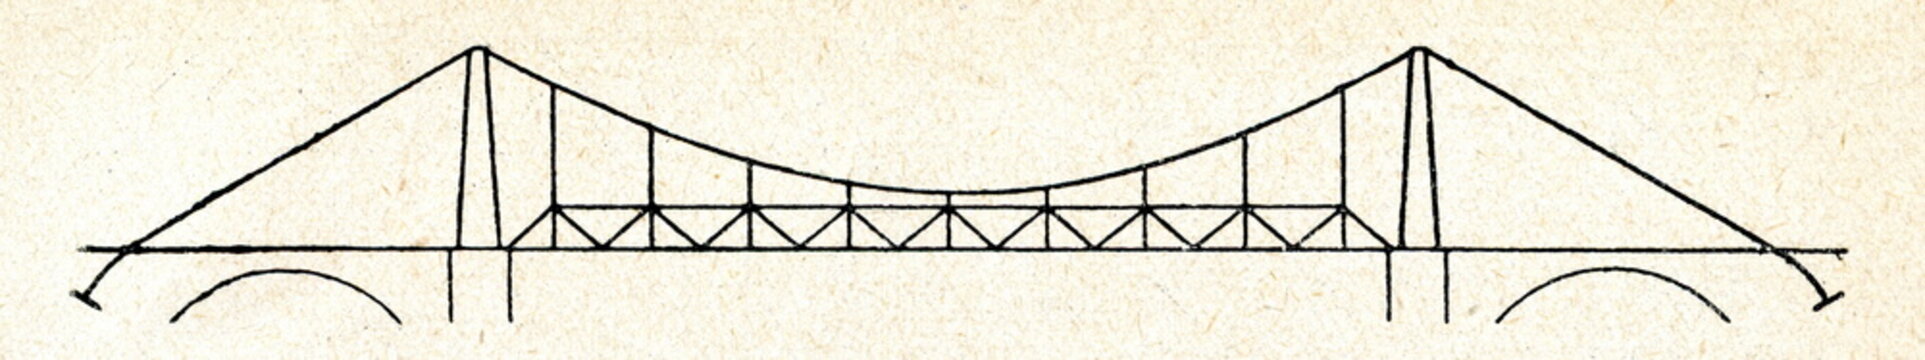 Bridge with hanged truss